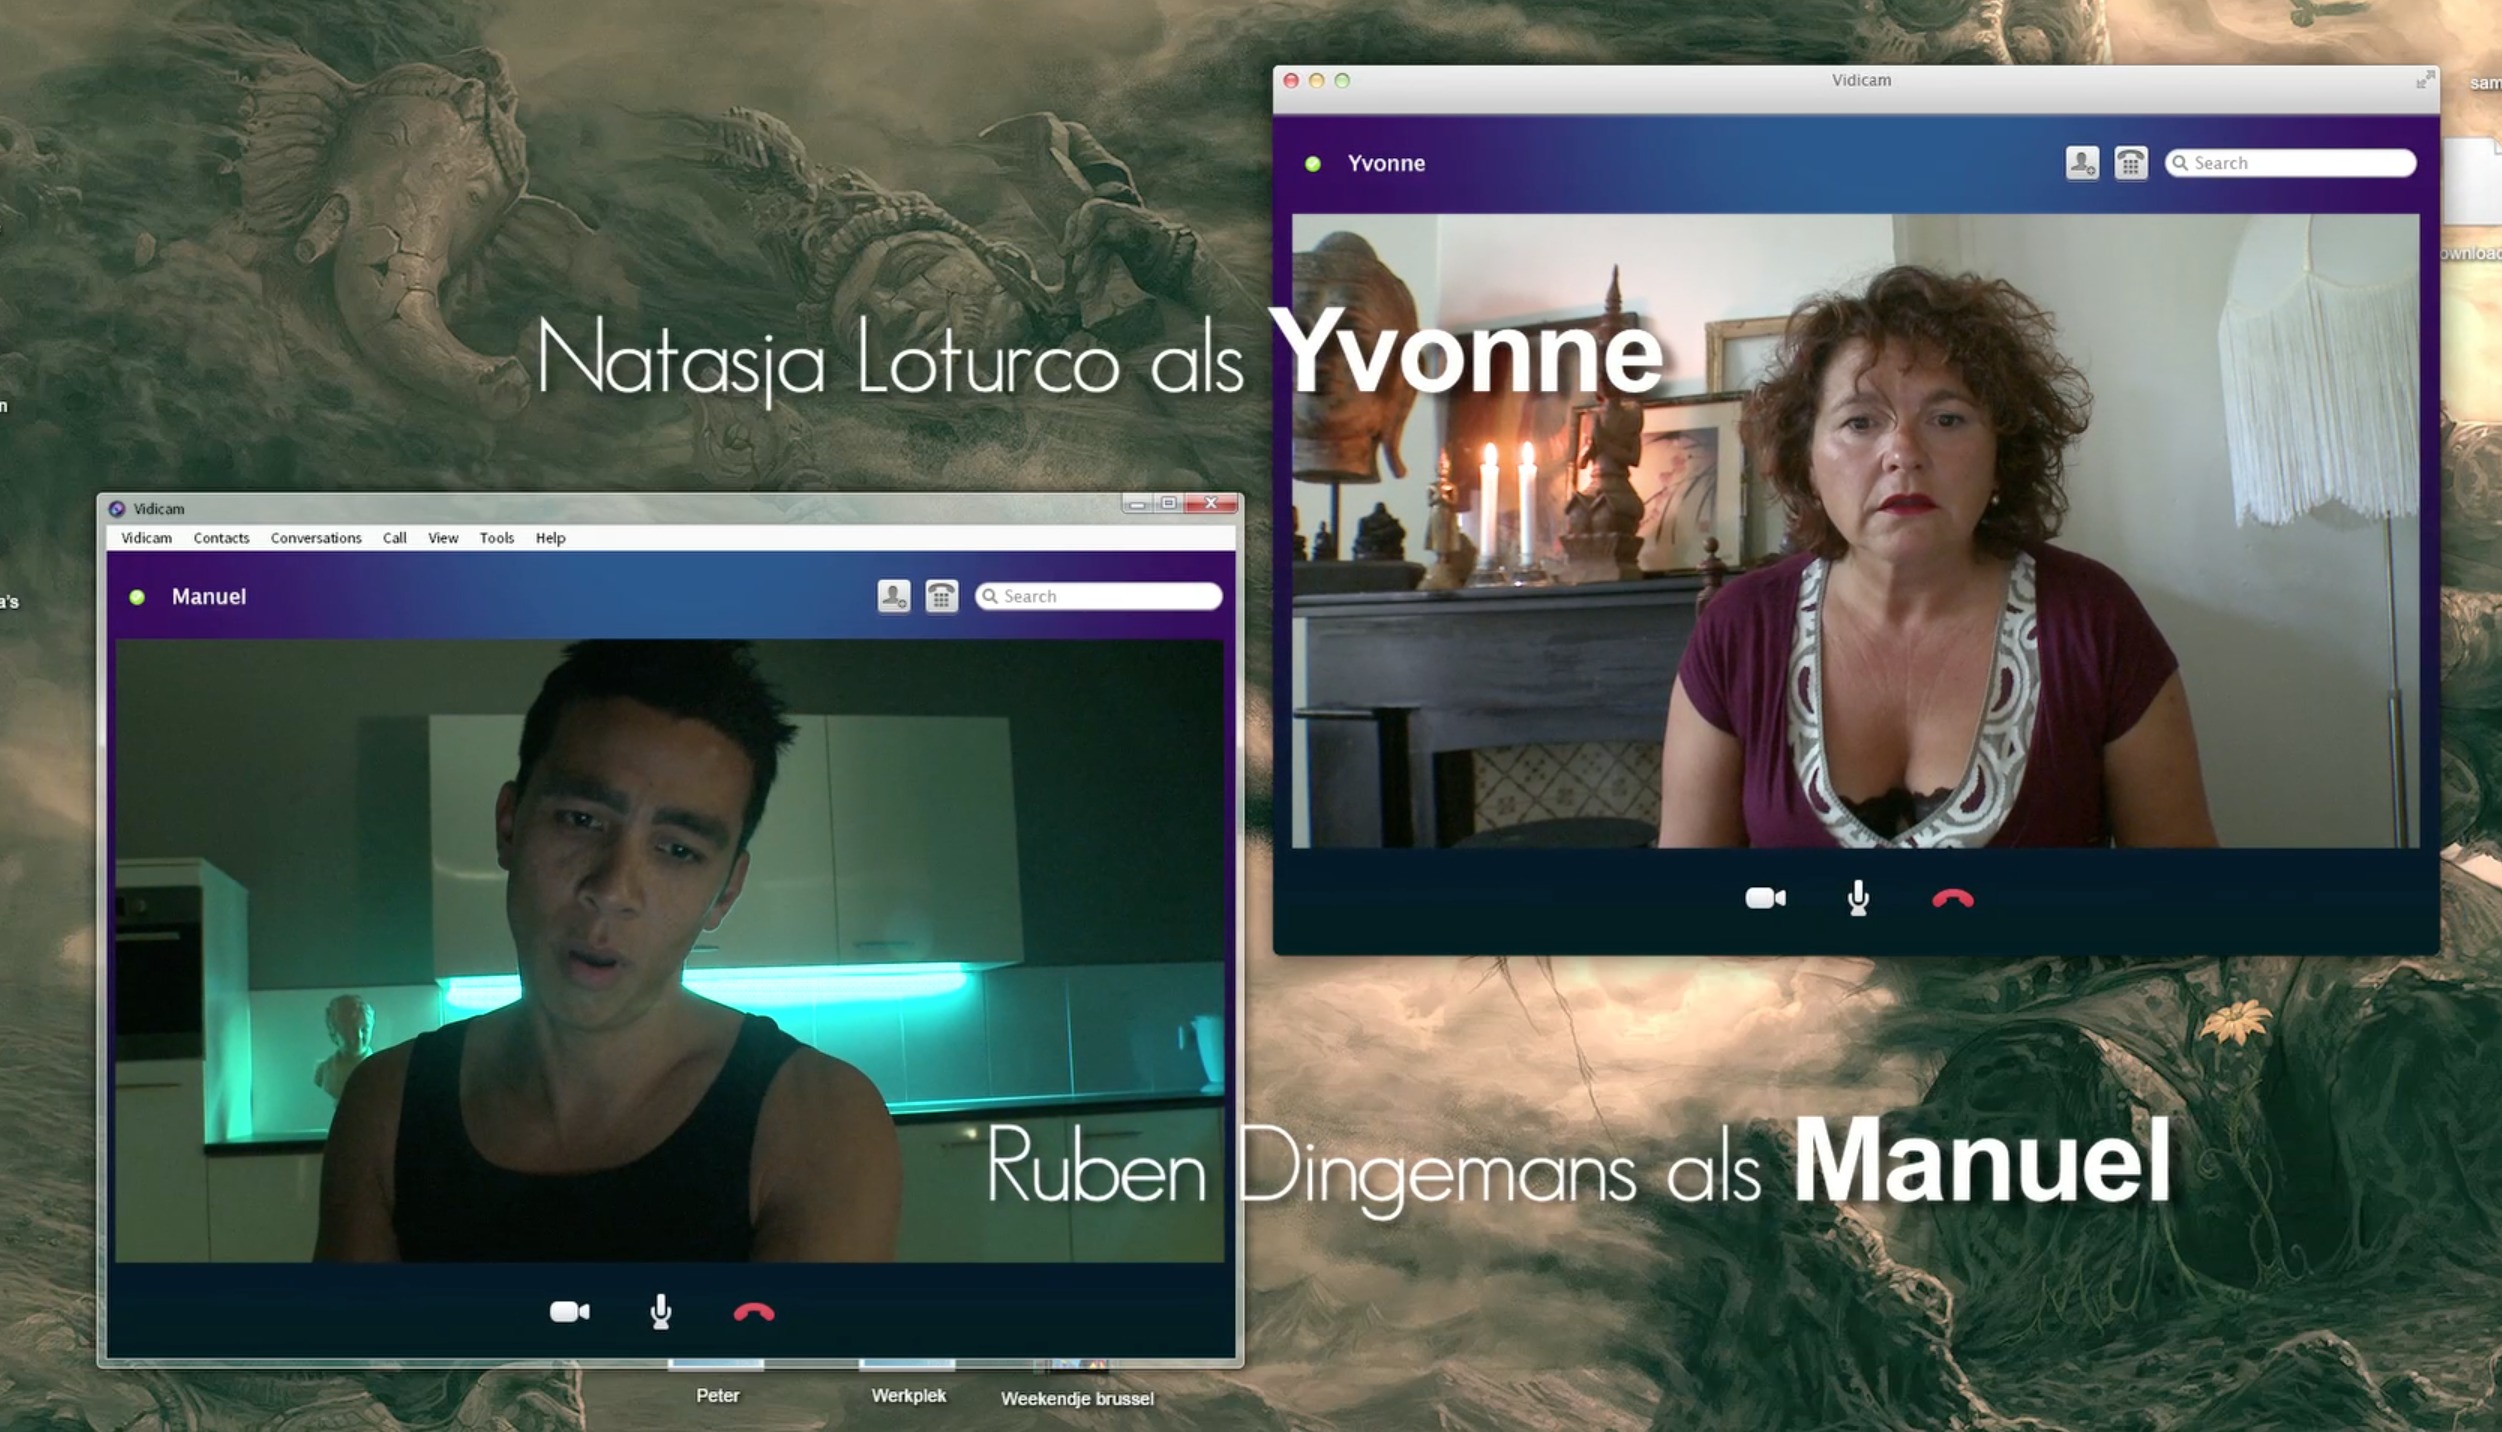 Ruben Dingemans and Natasja Loturco in Sophie's Web (2013)